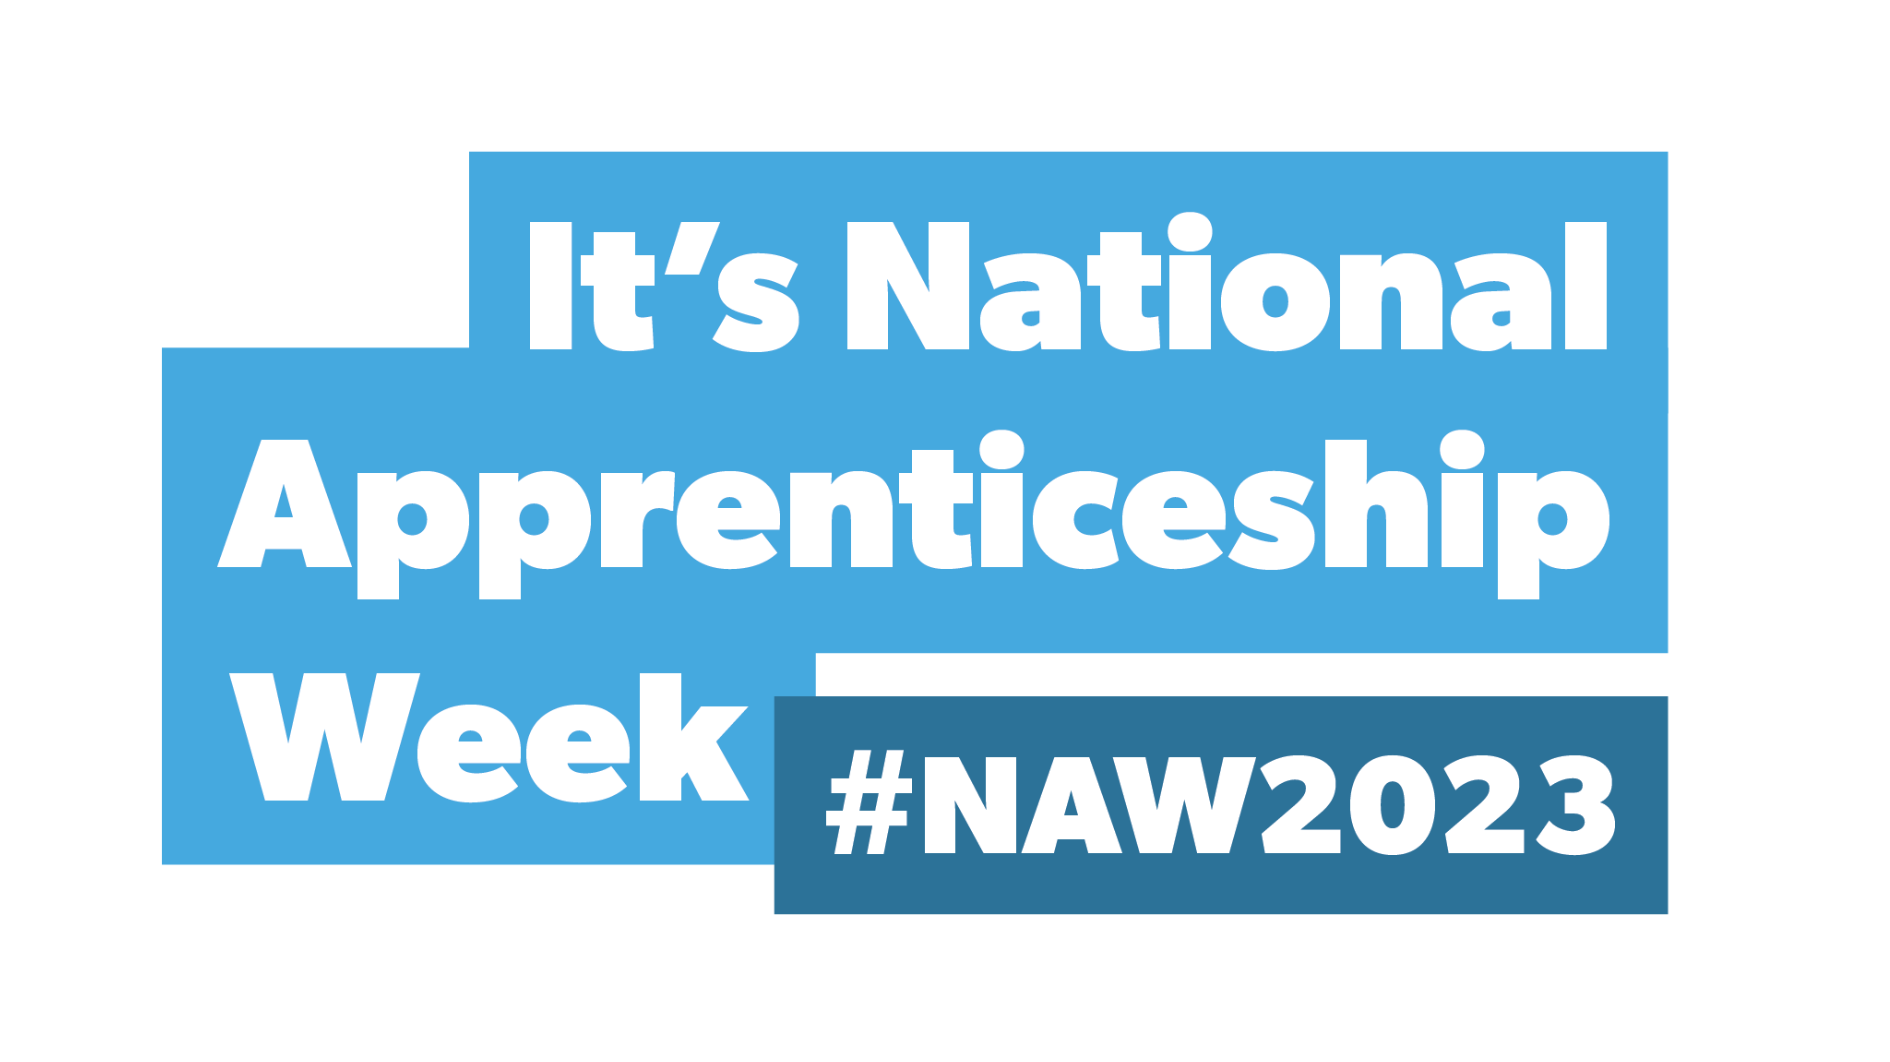 It's National Apprenticeship Week #NAW2023